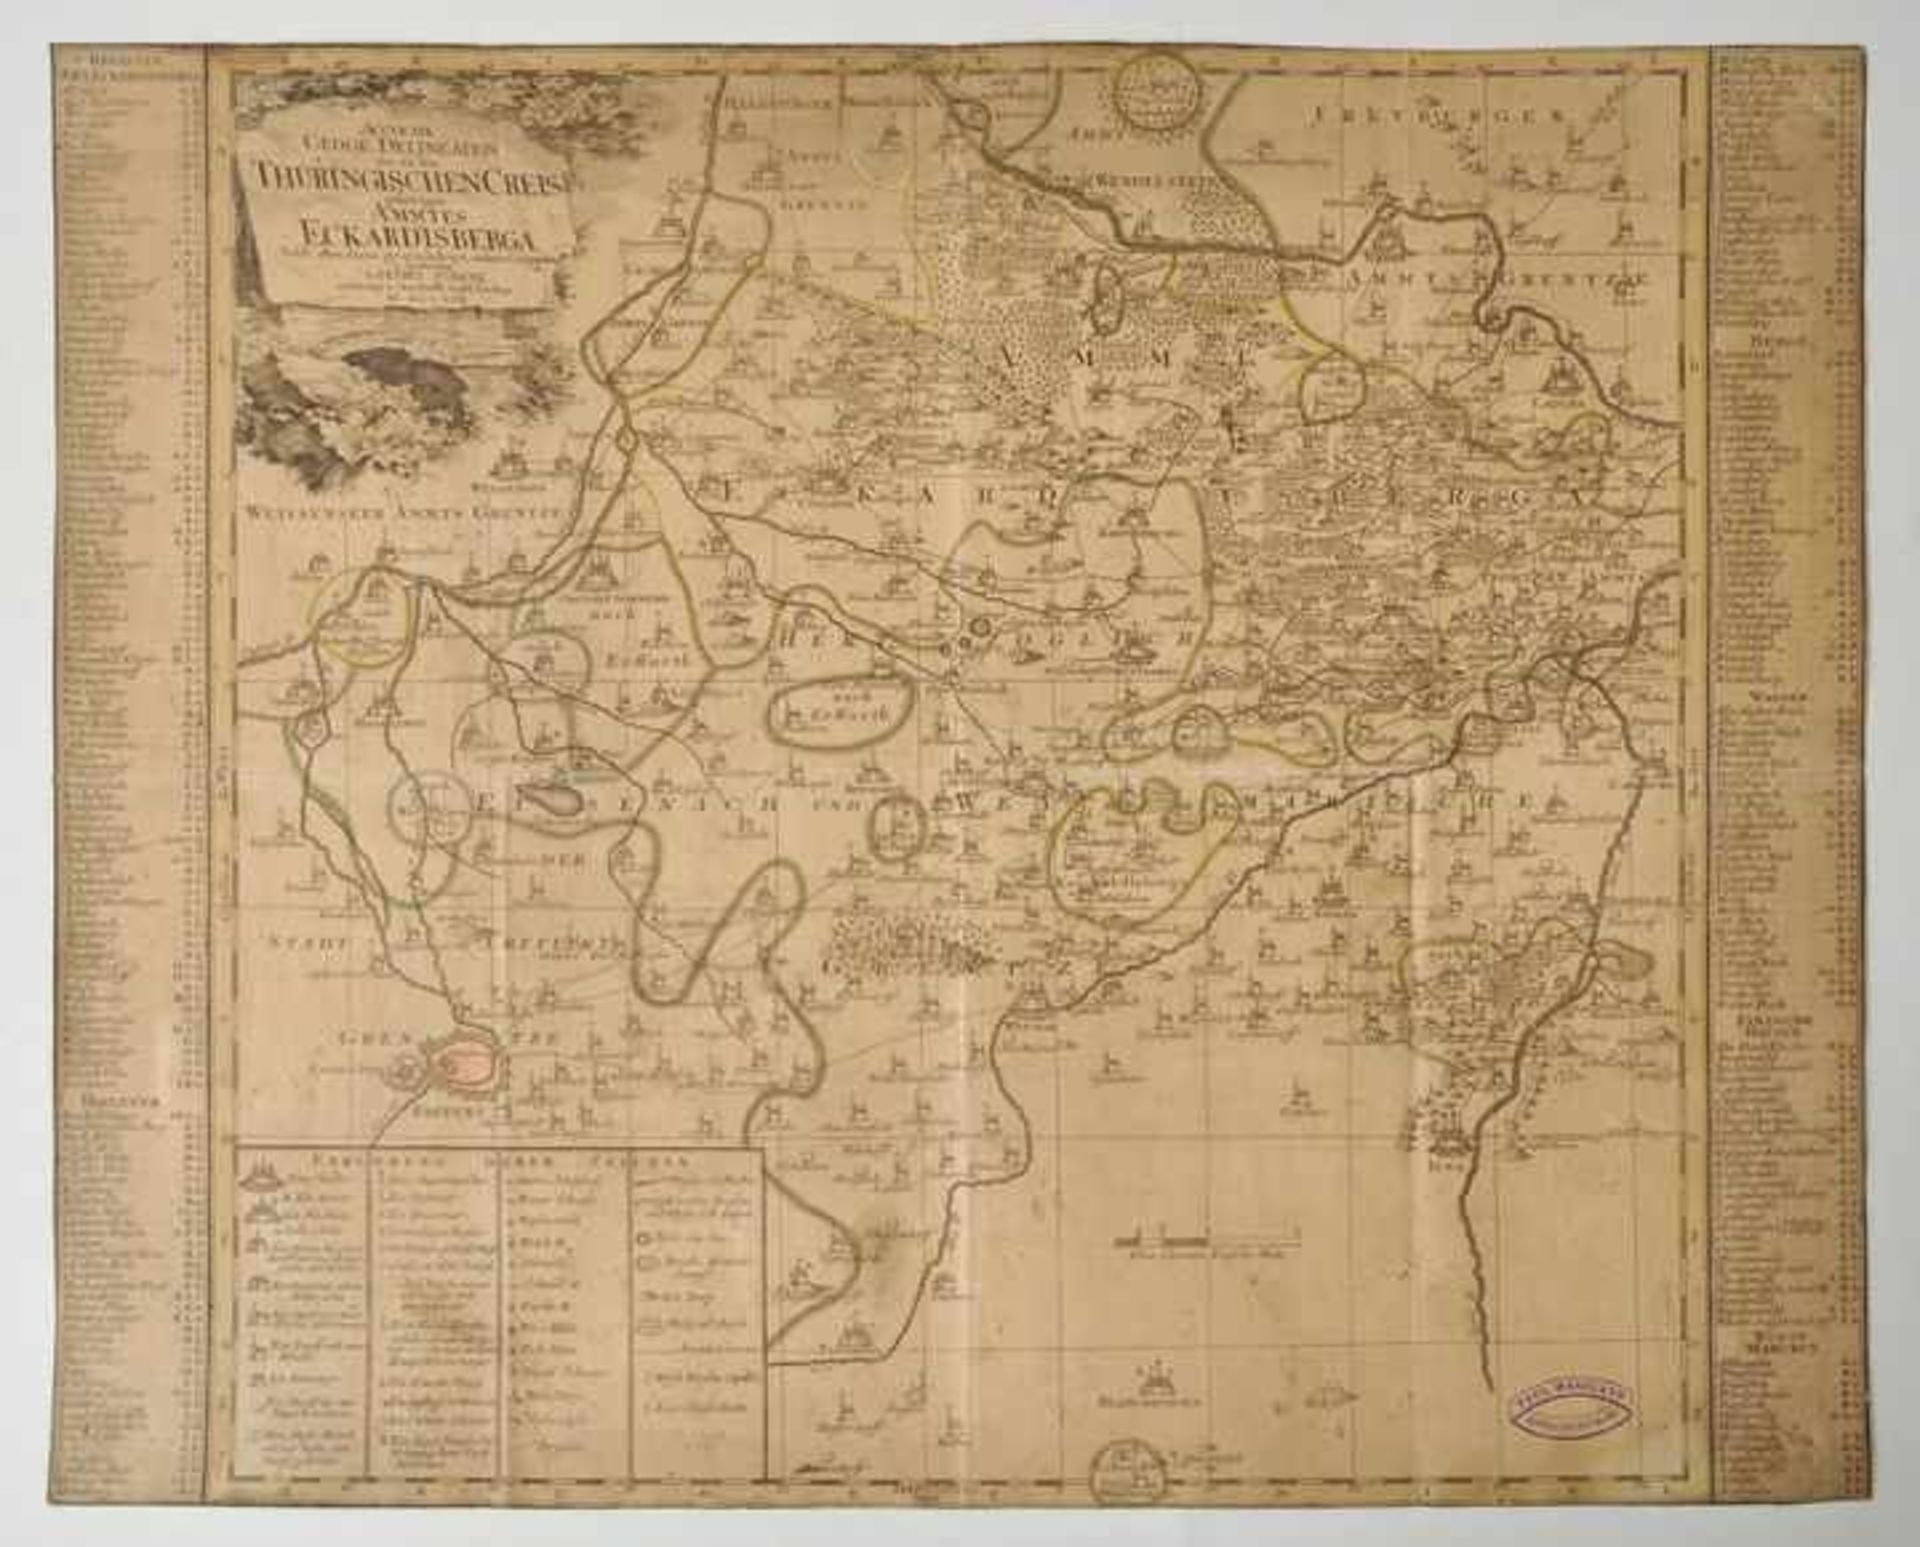 Karte des Amtes Eckardtsberga in Thüringen, 1752 "Accurate Geogr. Delineation des zu dem